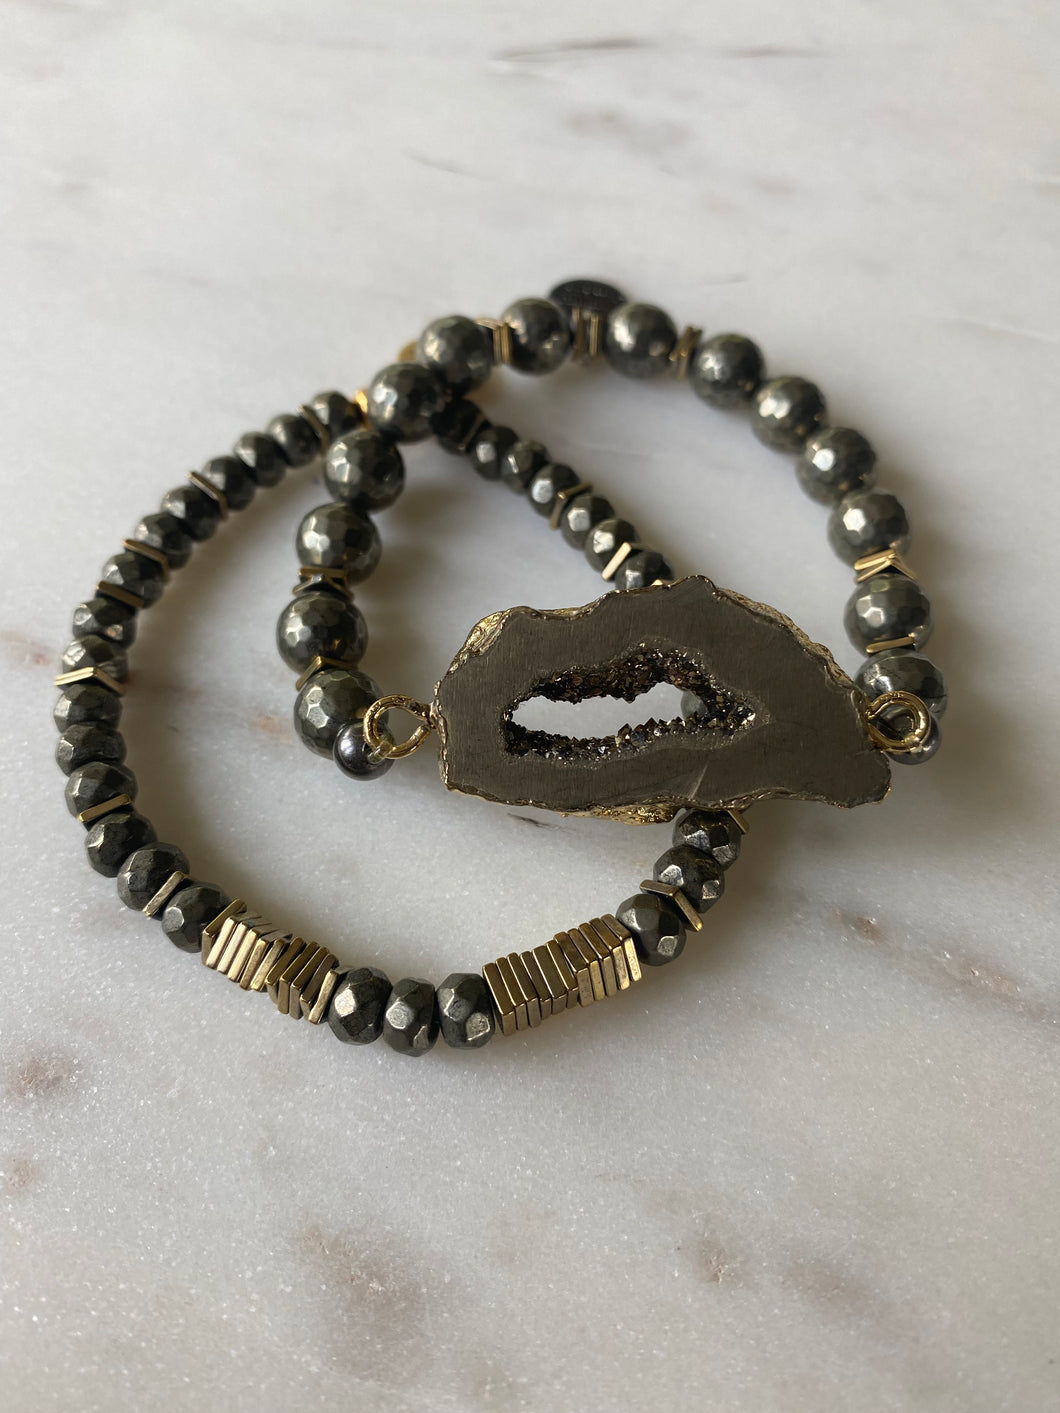 Pyrite druzy agate bracelet set